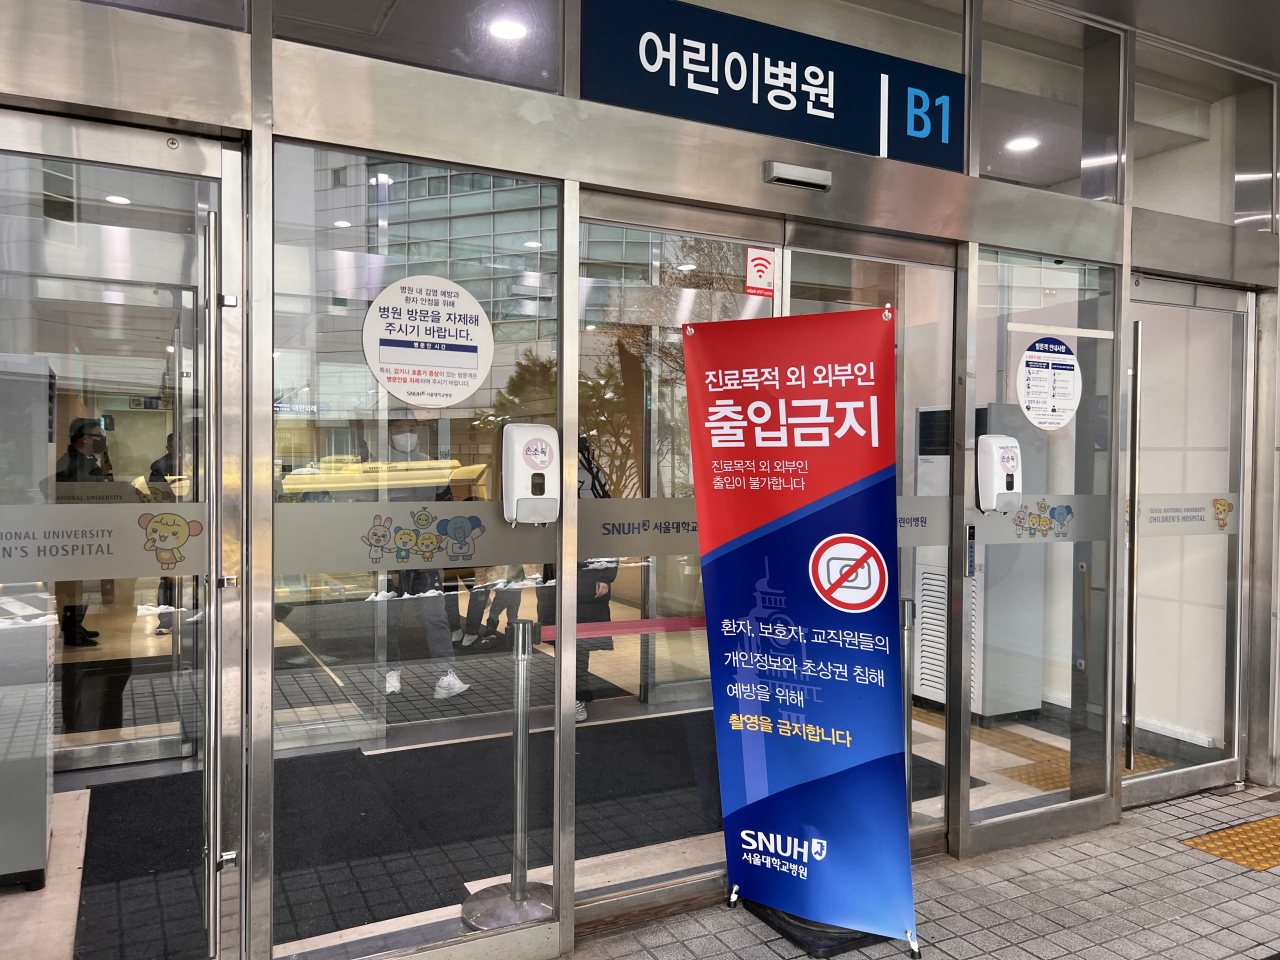 People wait inside the Pediatric Emergency Center at Seoul National University Hospital in Jongno-gu, central Seoul, Friday. (Park Jun-hee/The Korea Herald)